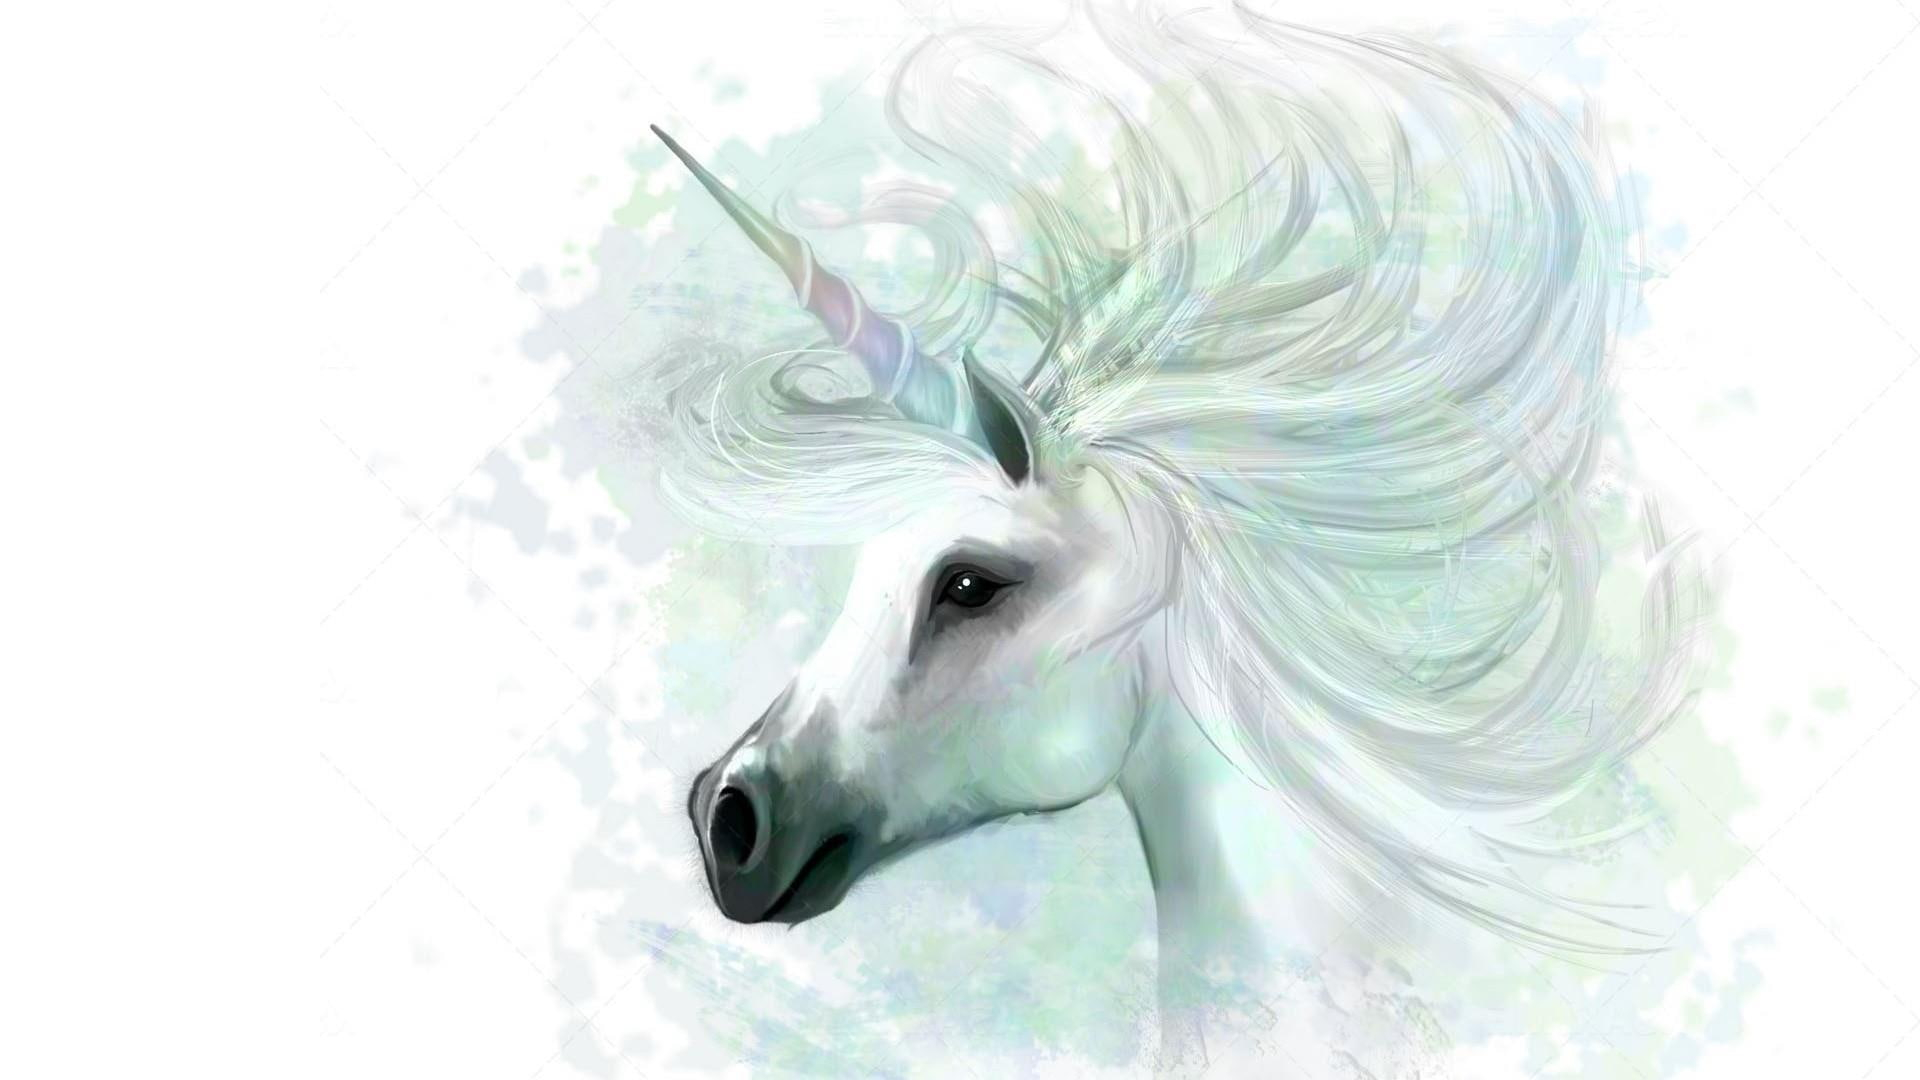 Unicorn wallpaper, fictional character, mythical creature, mane, illustration